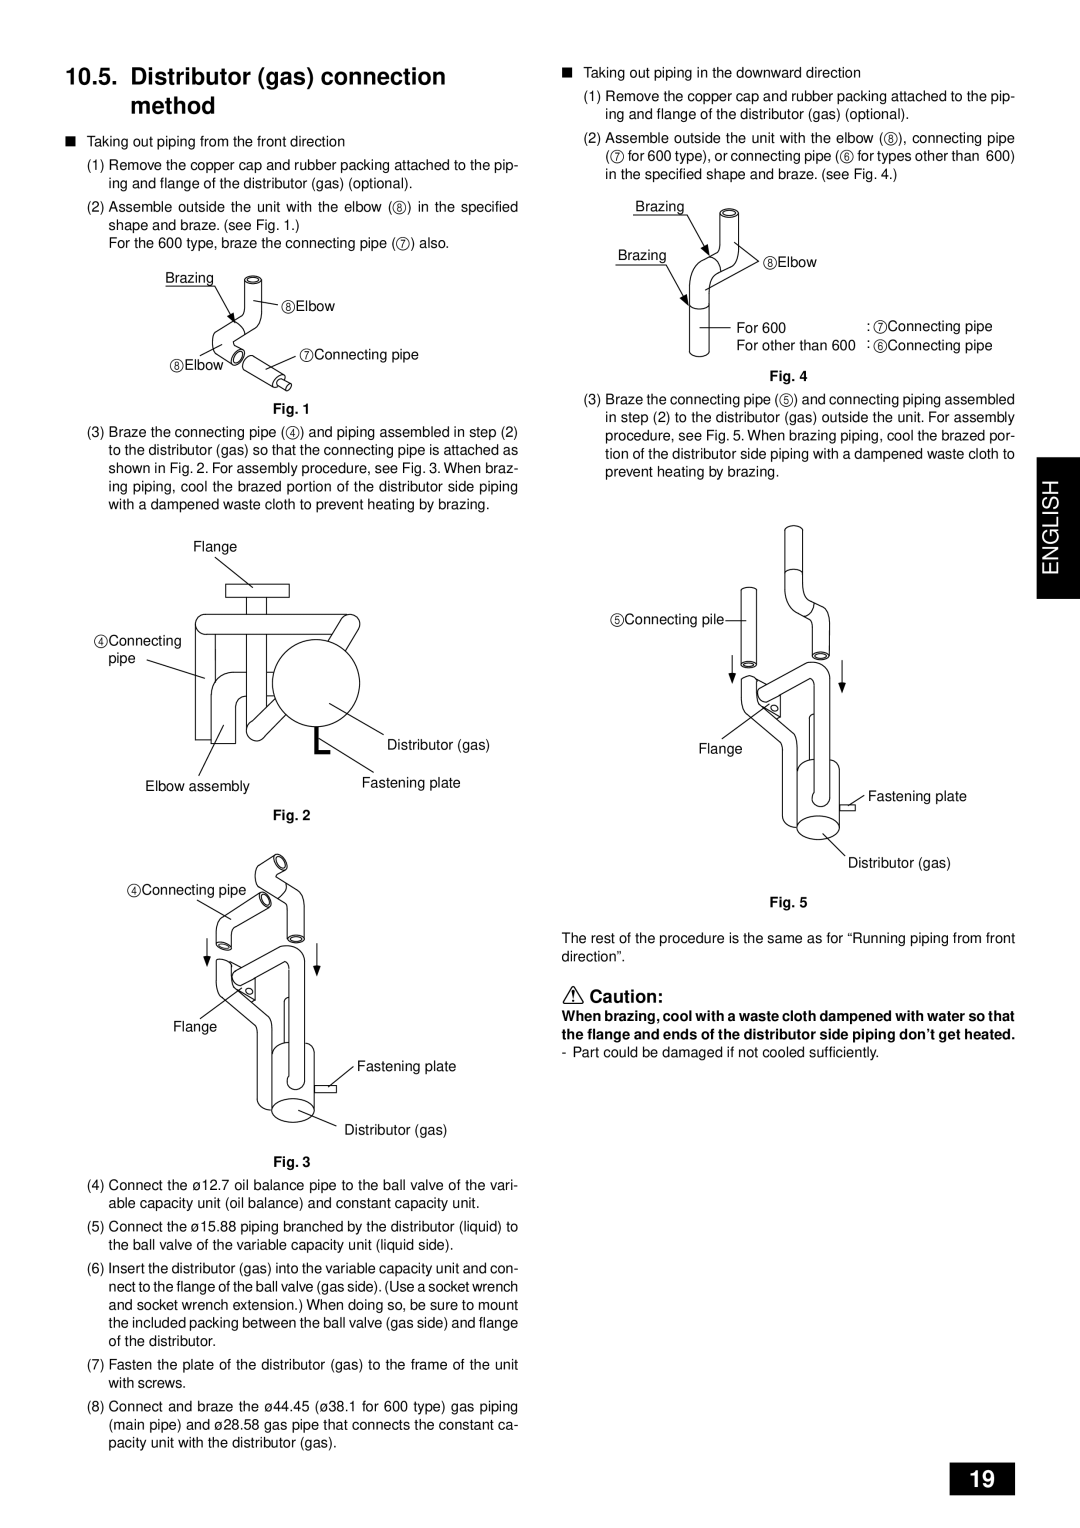 Mitsubishi Electronics PUHY-YMC installation manual Distributor gas connection method, English 